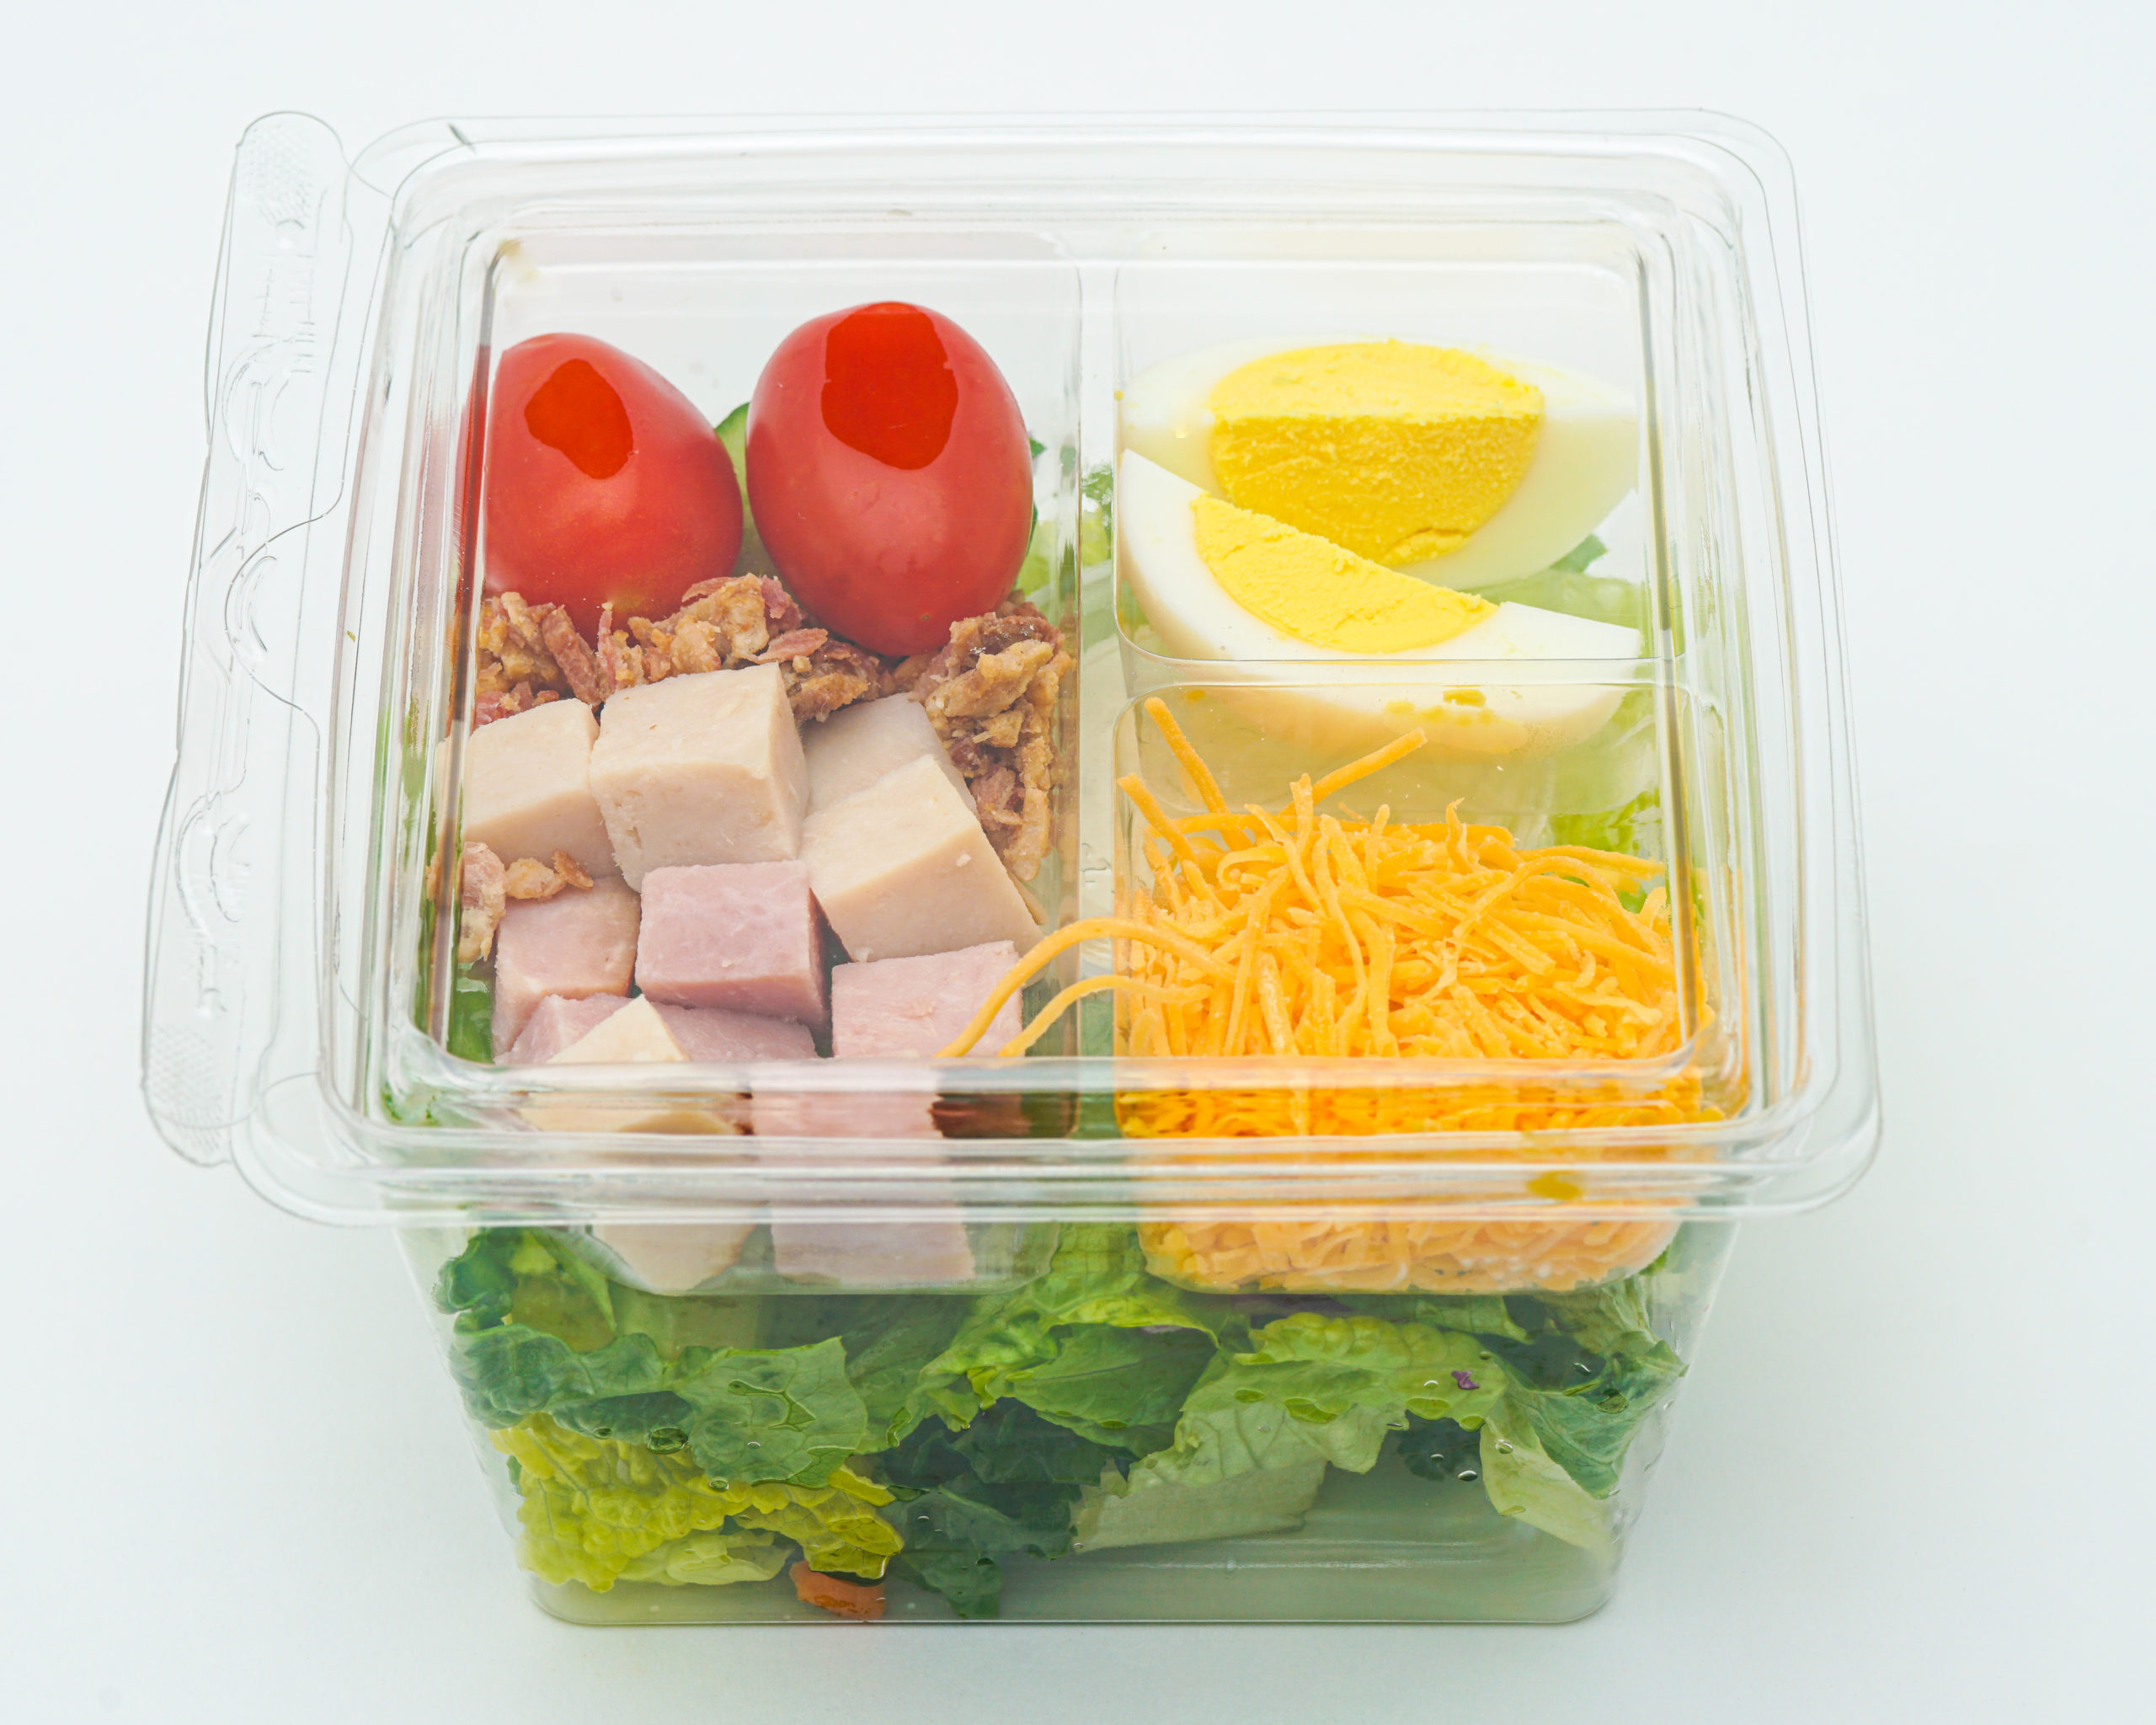 Salad Items